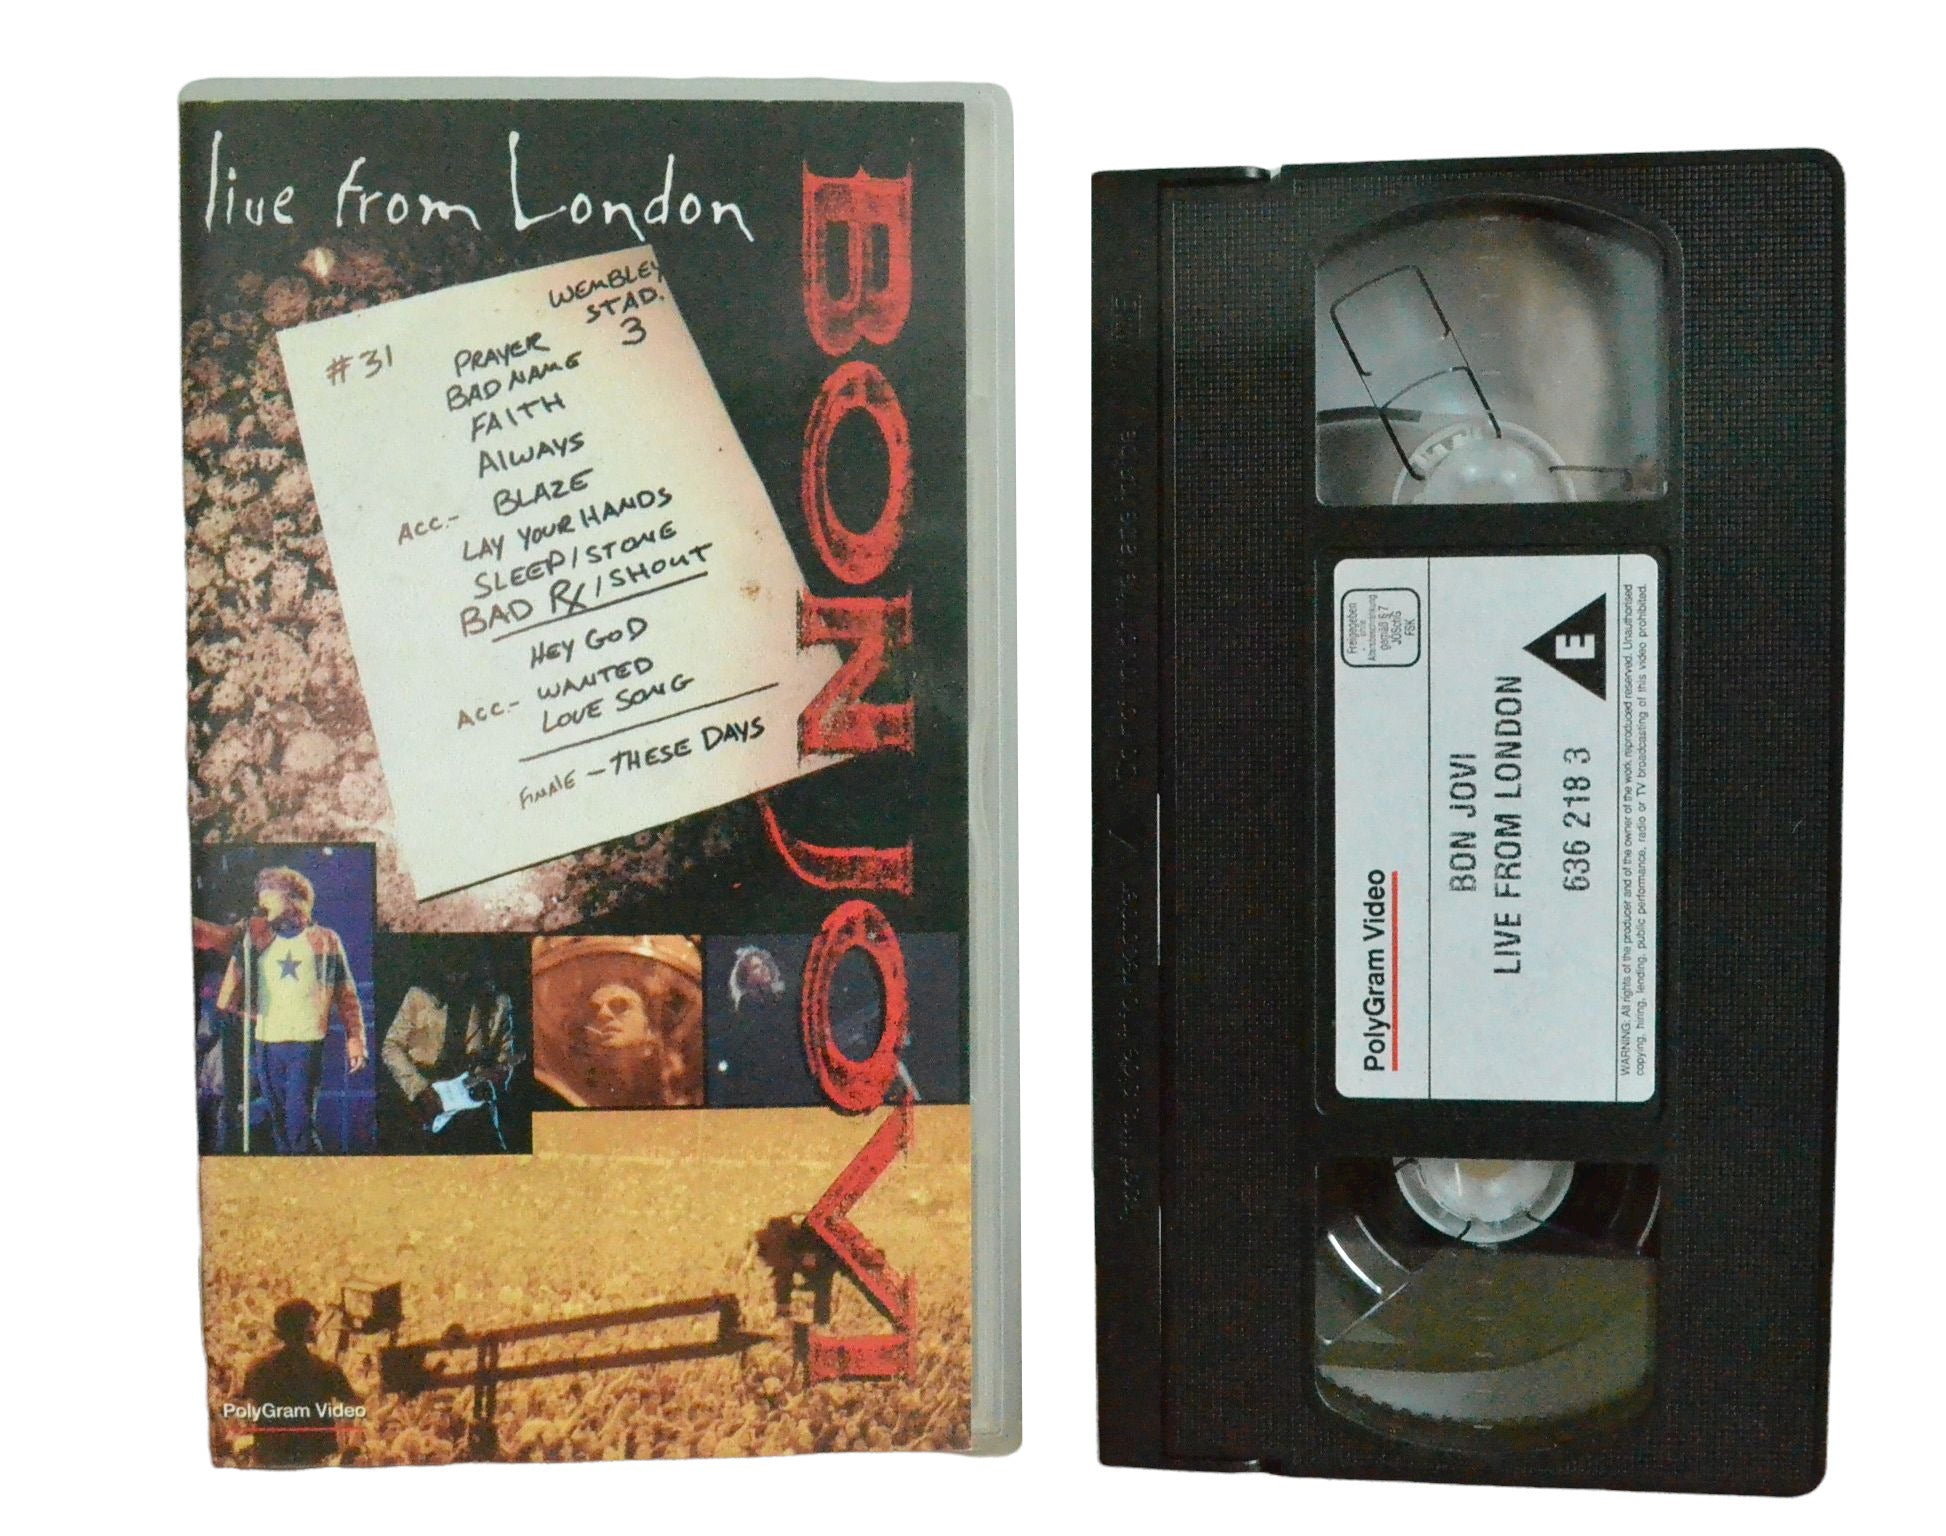 Bon Jovi Live From London - Jon Bon Jovi - PolyGram Video - Music - Pal VHS-